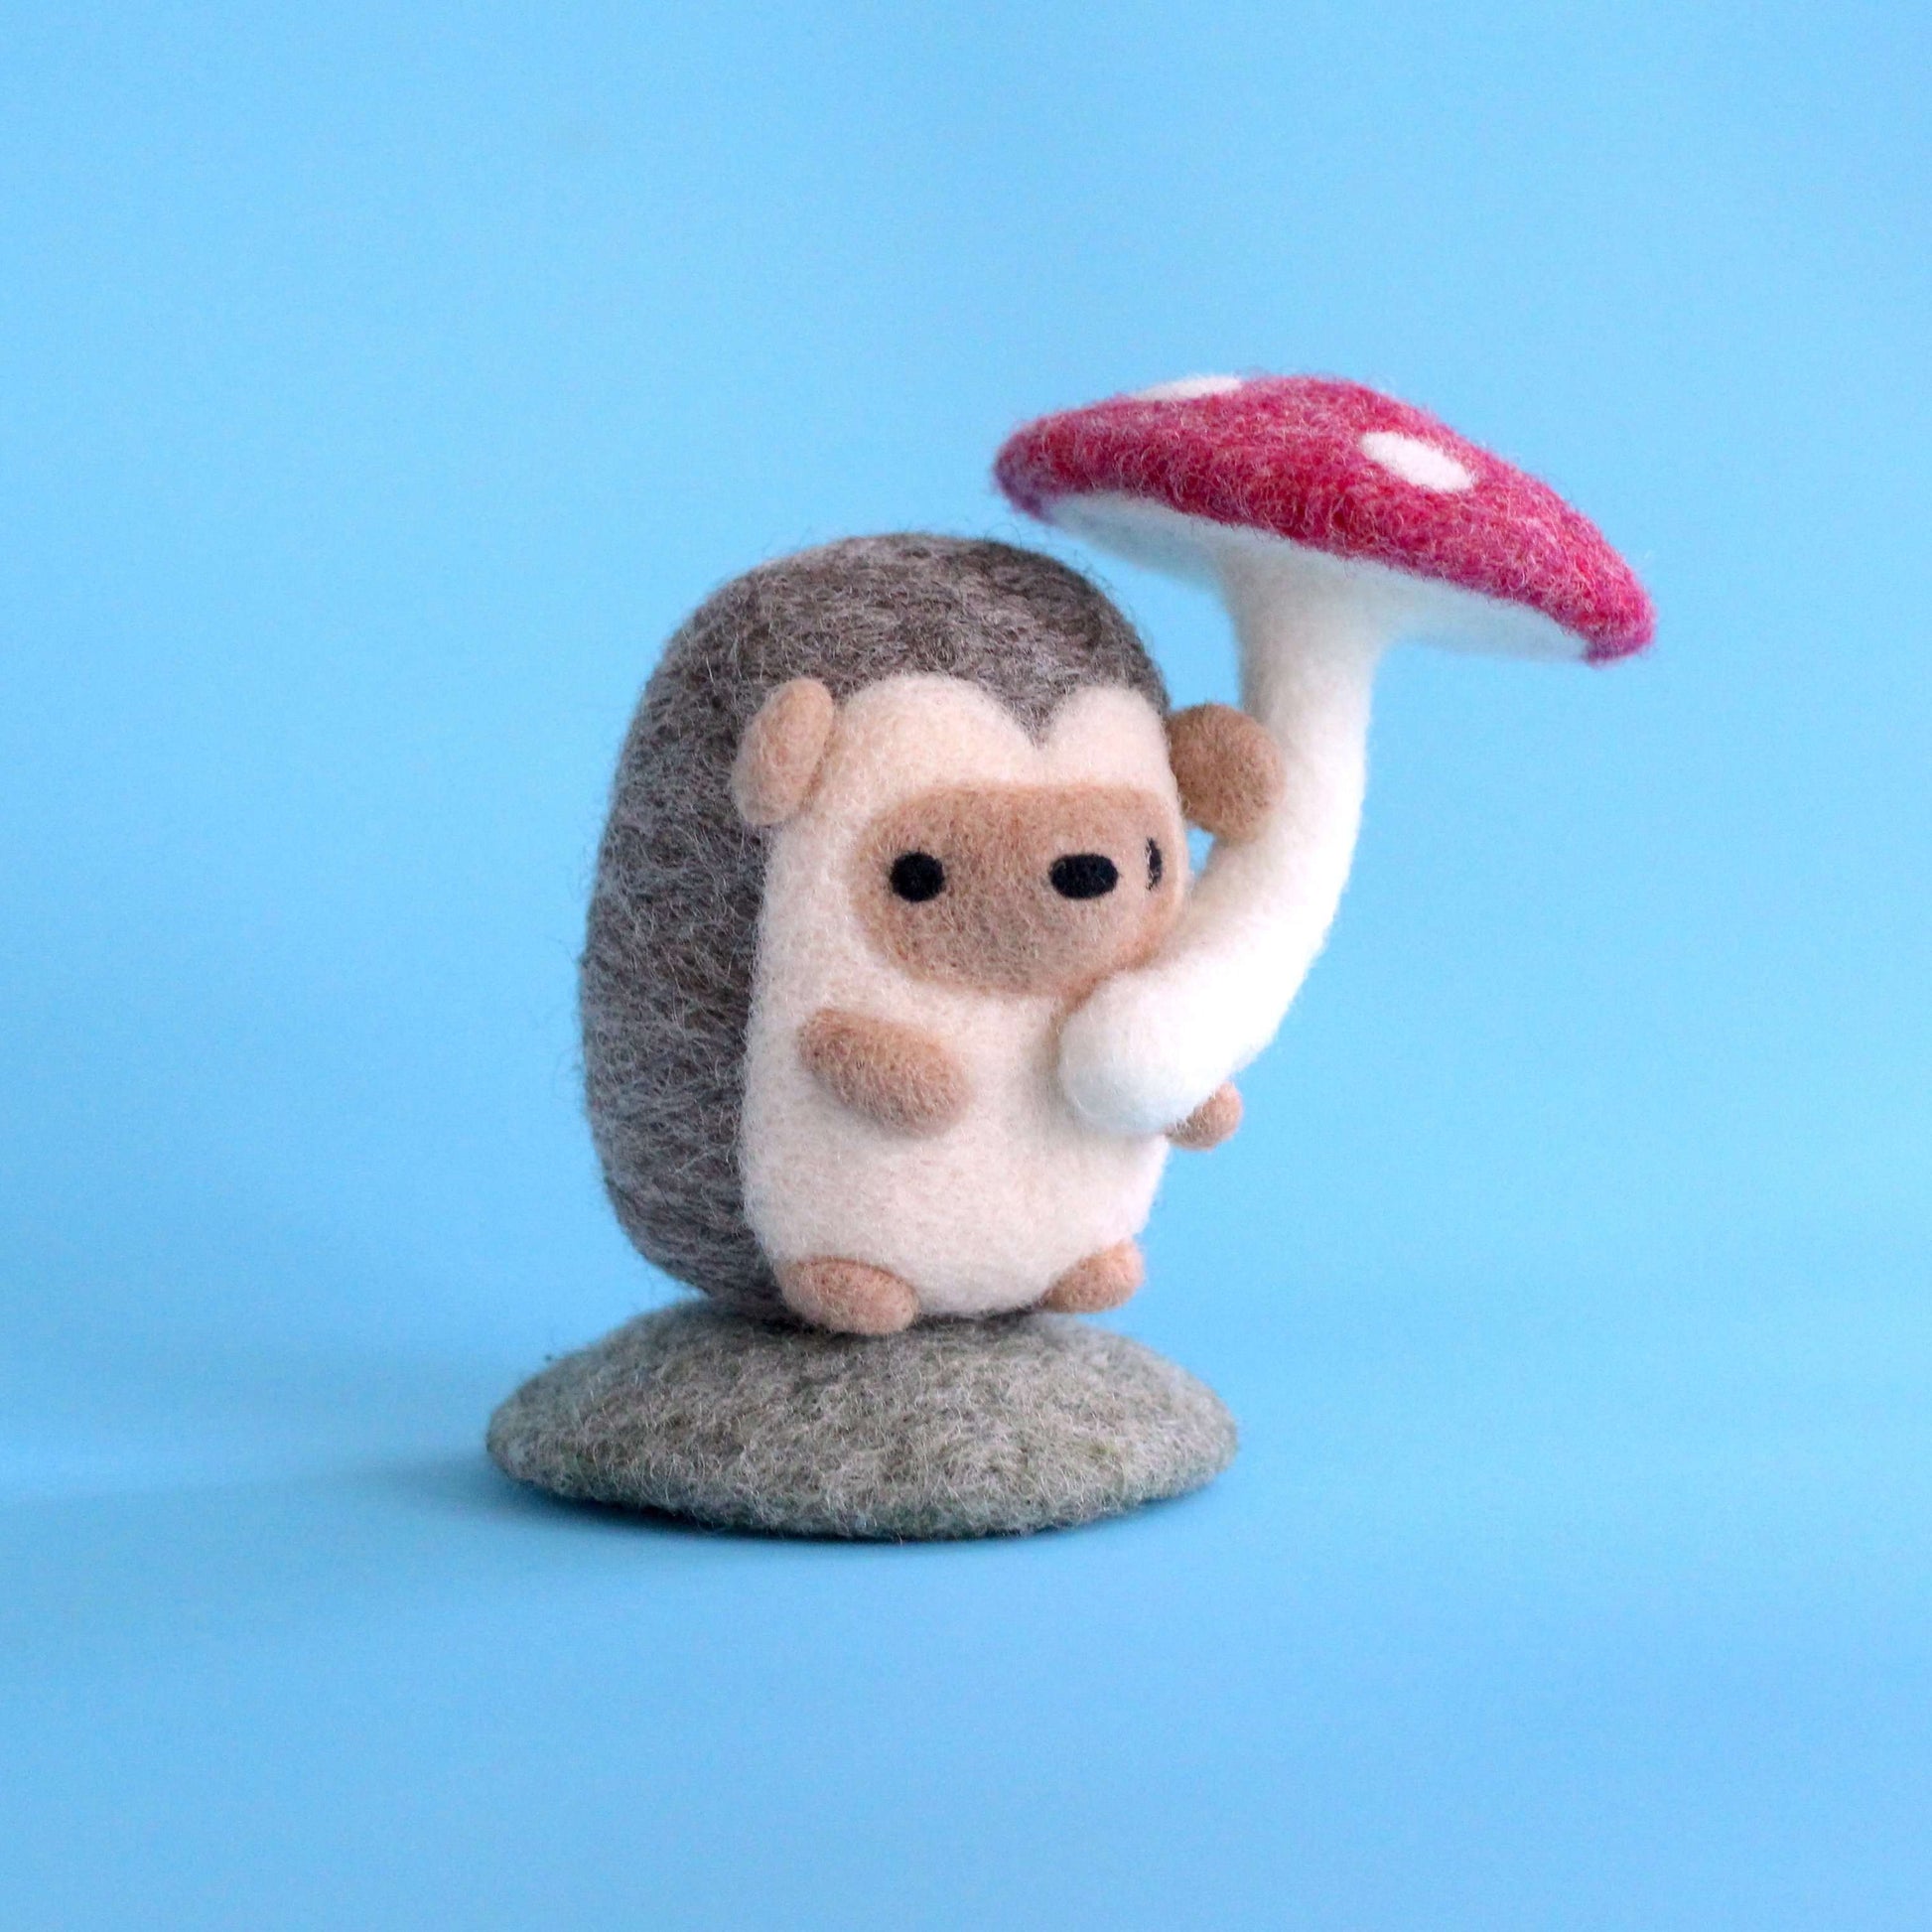 Needle Felted Hedgehog Holding Mushroom Umbrella by Wild Whimsy Woolies